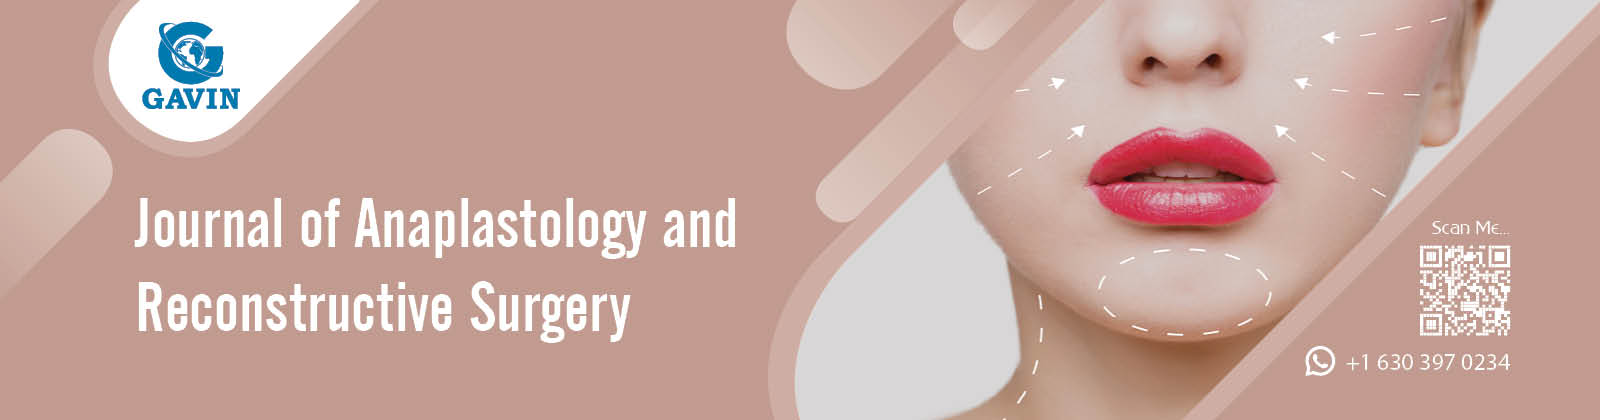 Surgery & Anaplastology 2